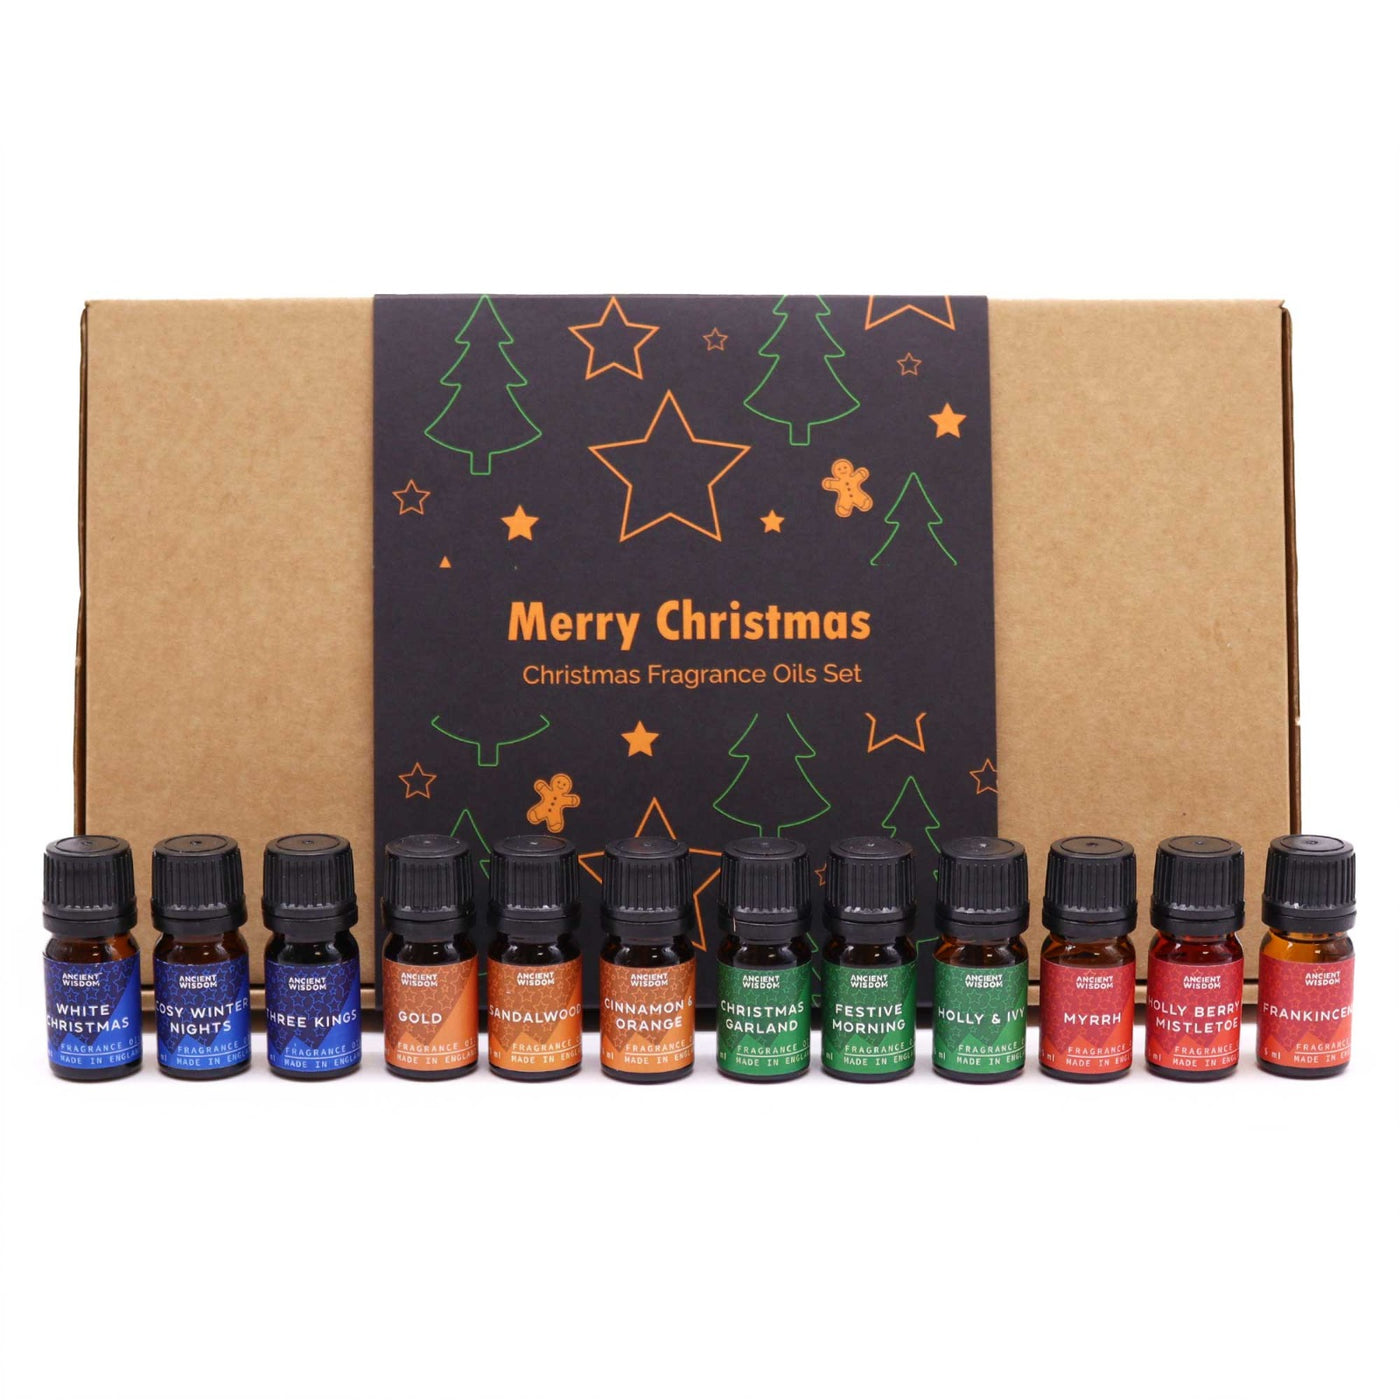 Christmas Scented Home Fragrance Oils Gift Set. 